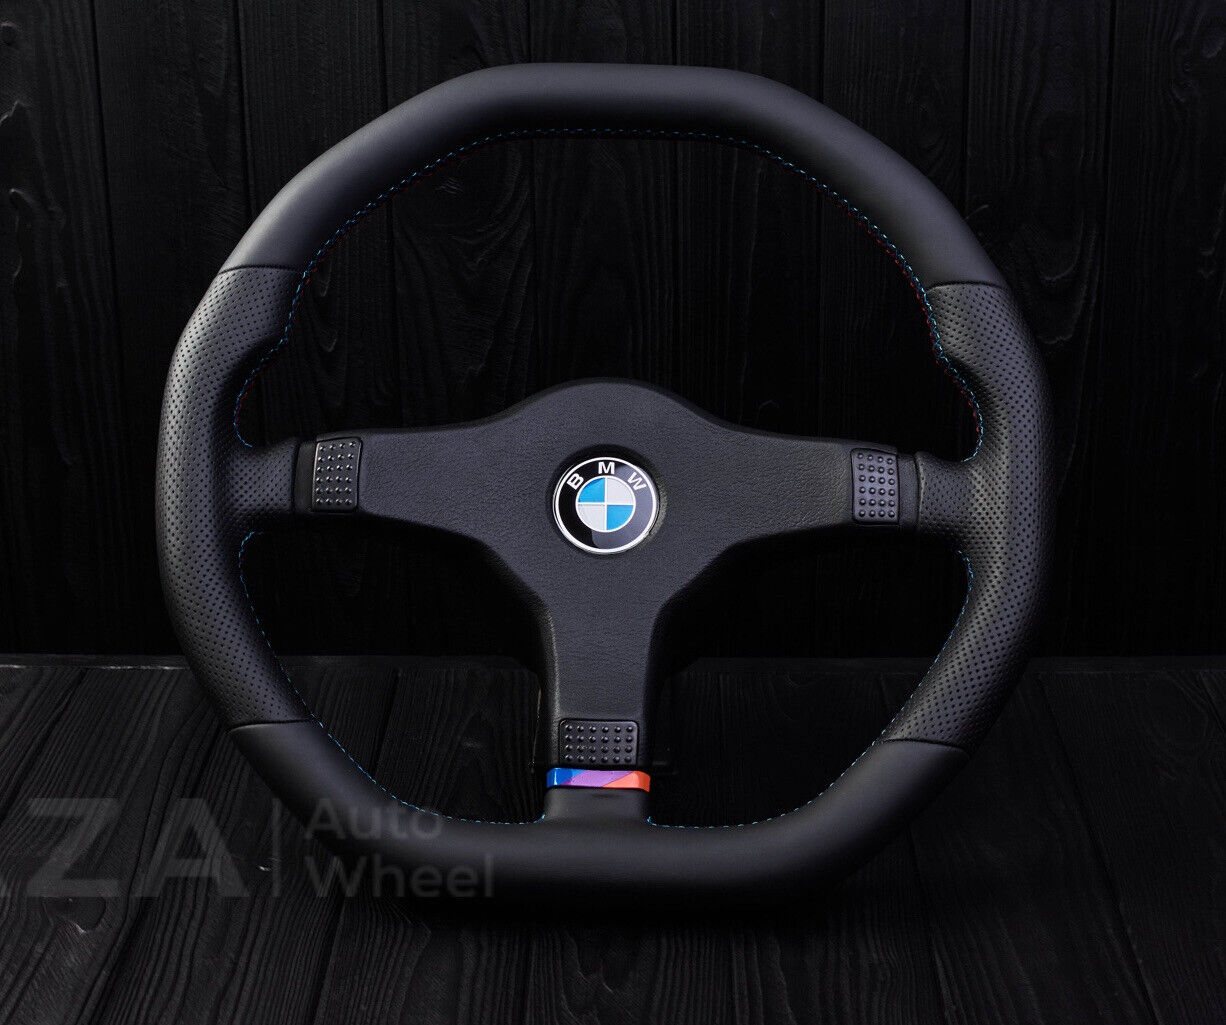 Aza Auto Wheel BMW E30 M3 M Tech 1 steering wheel refinished 385mm